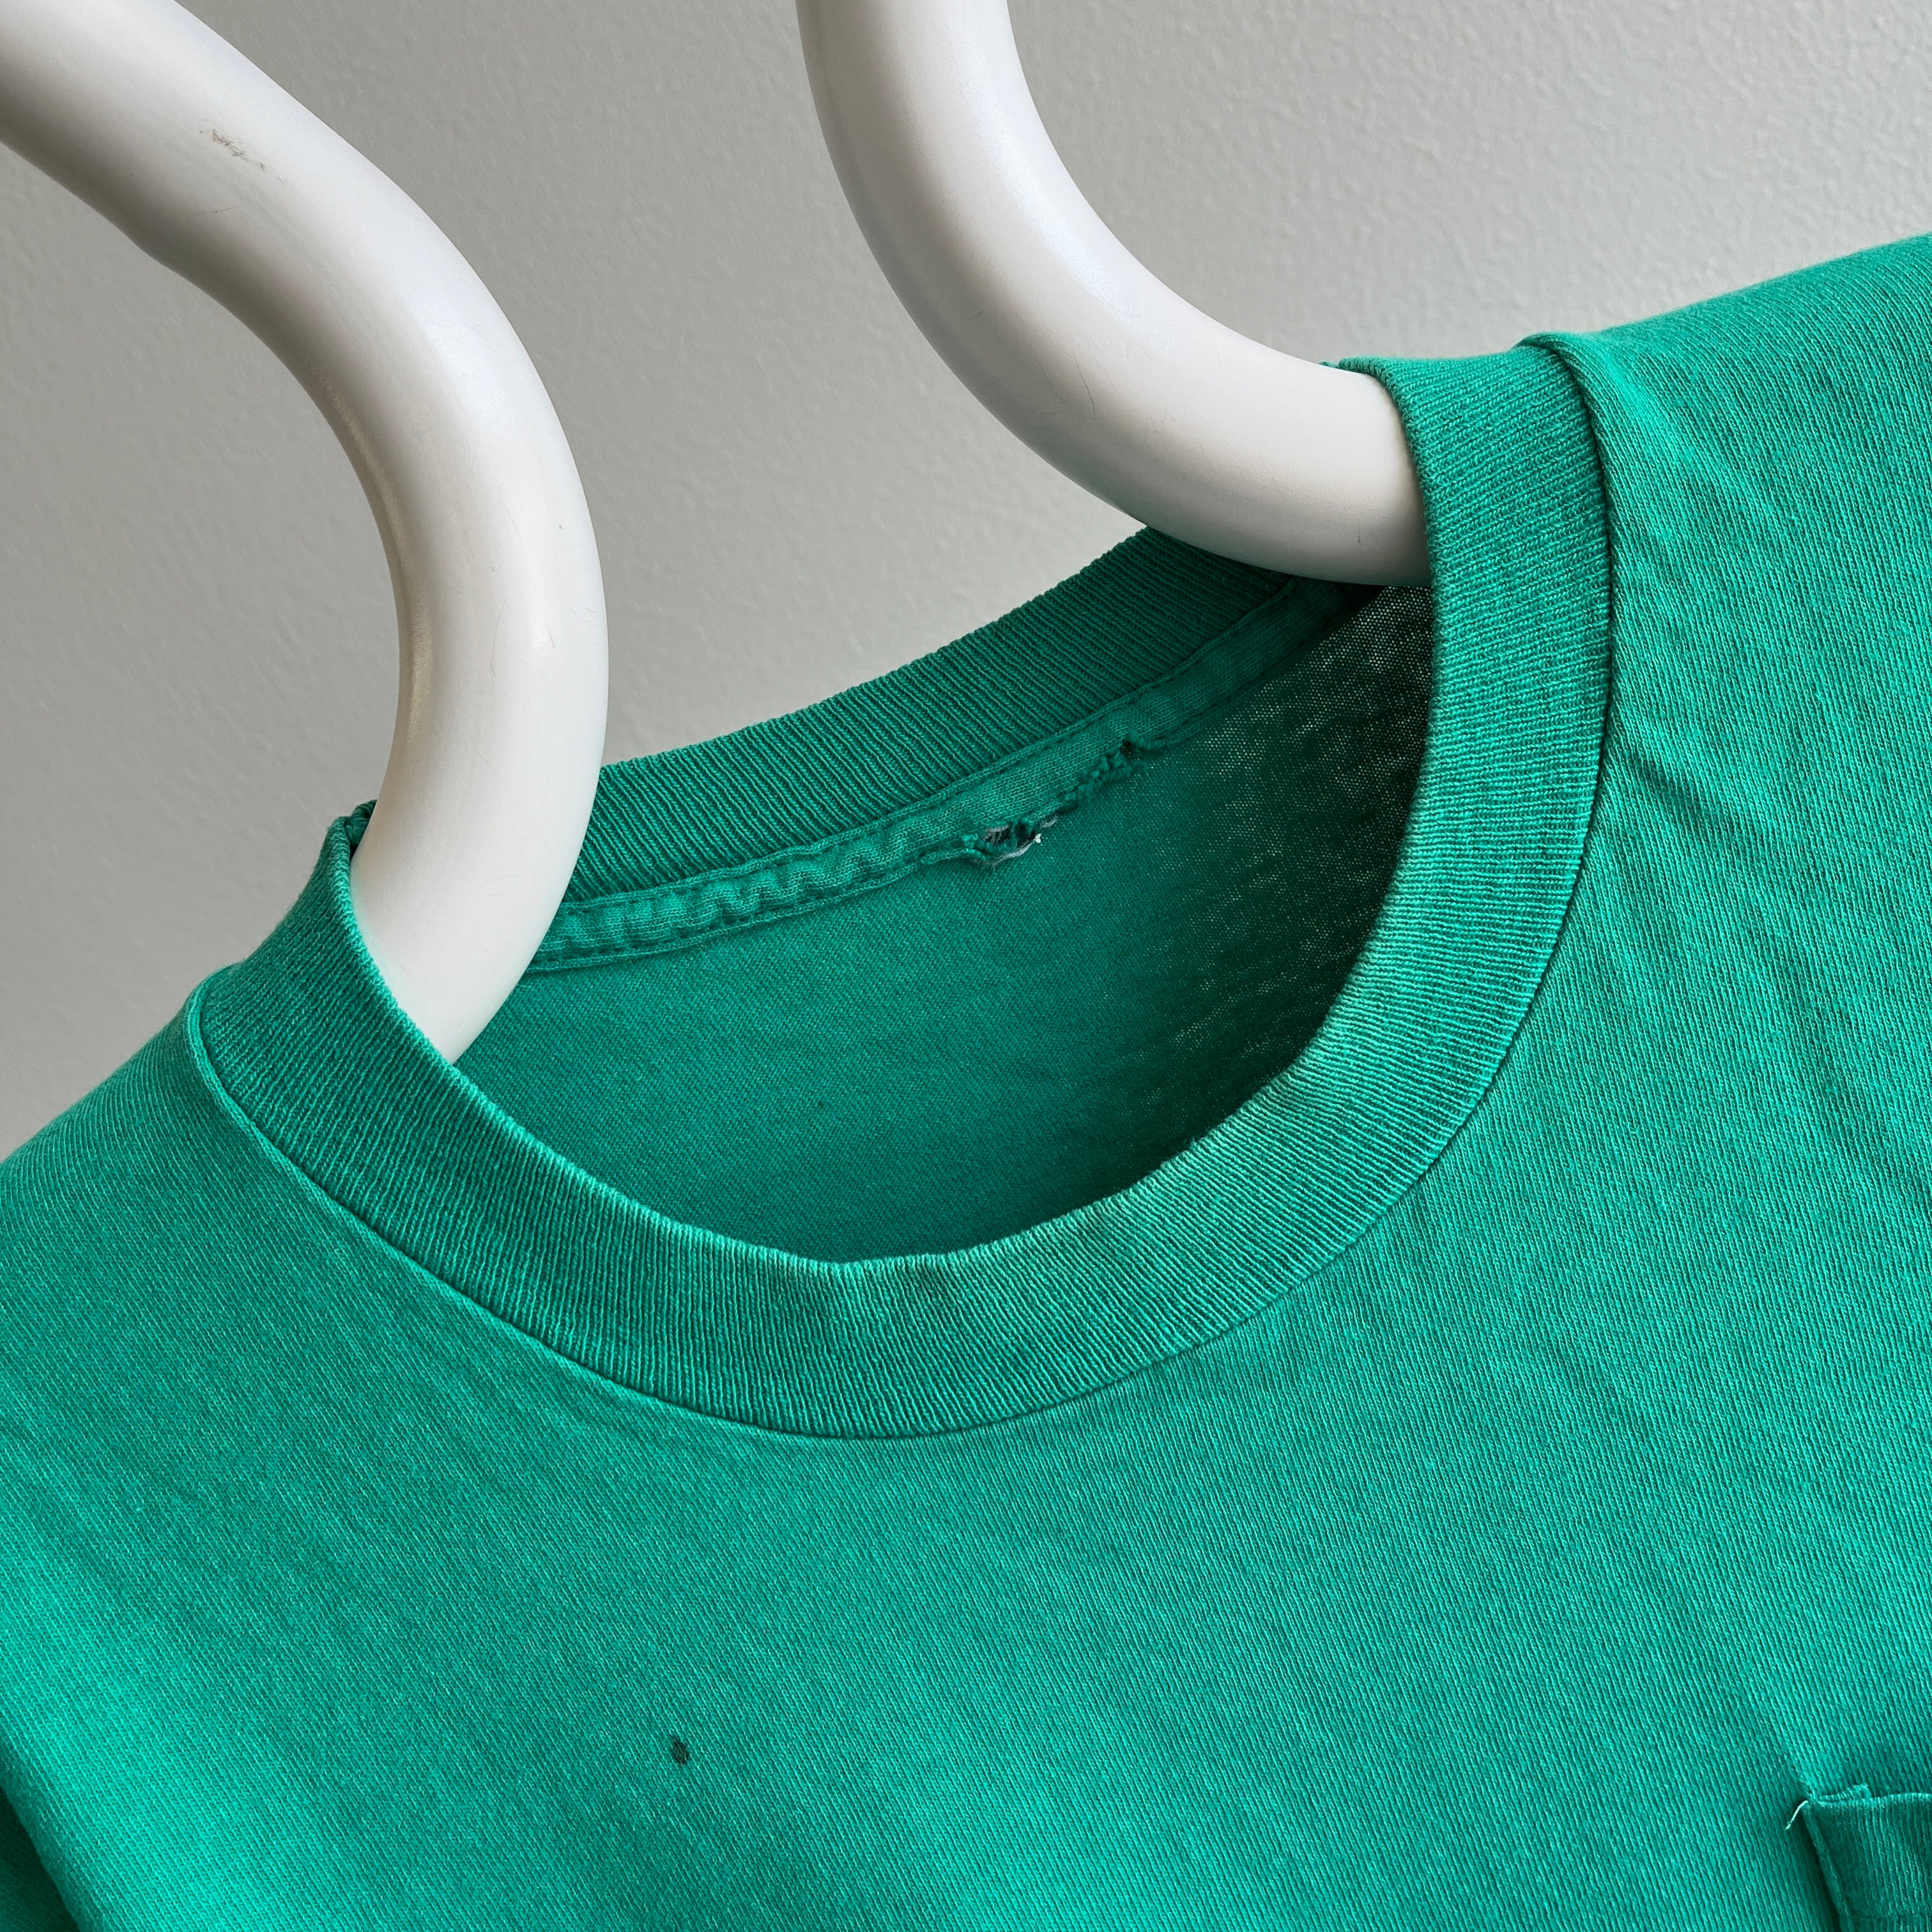 1980s Blank Green Selvedge Pocket T-Shirt - Cotton